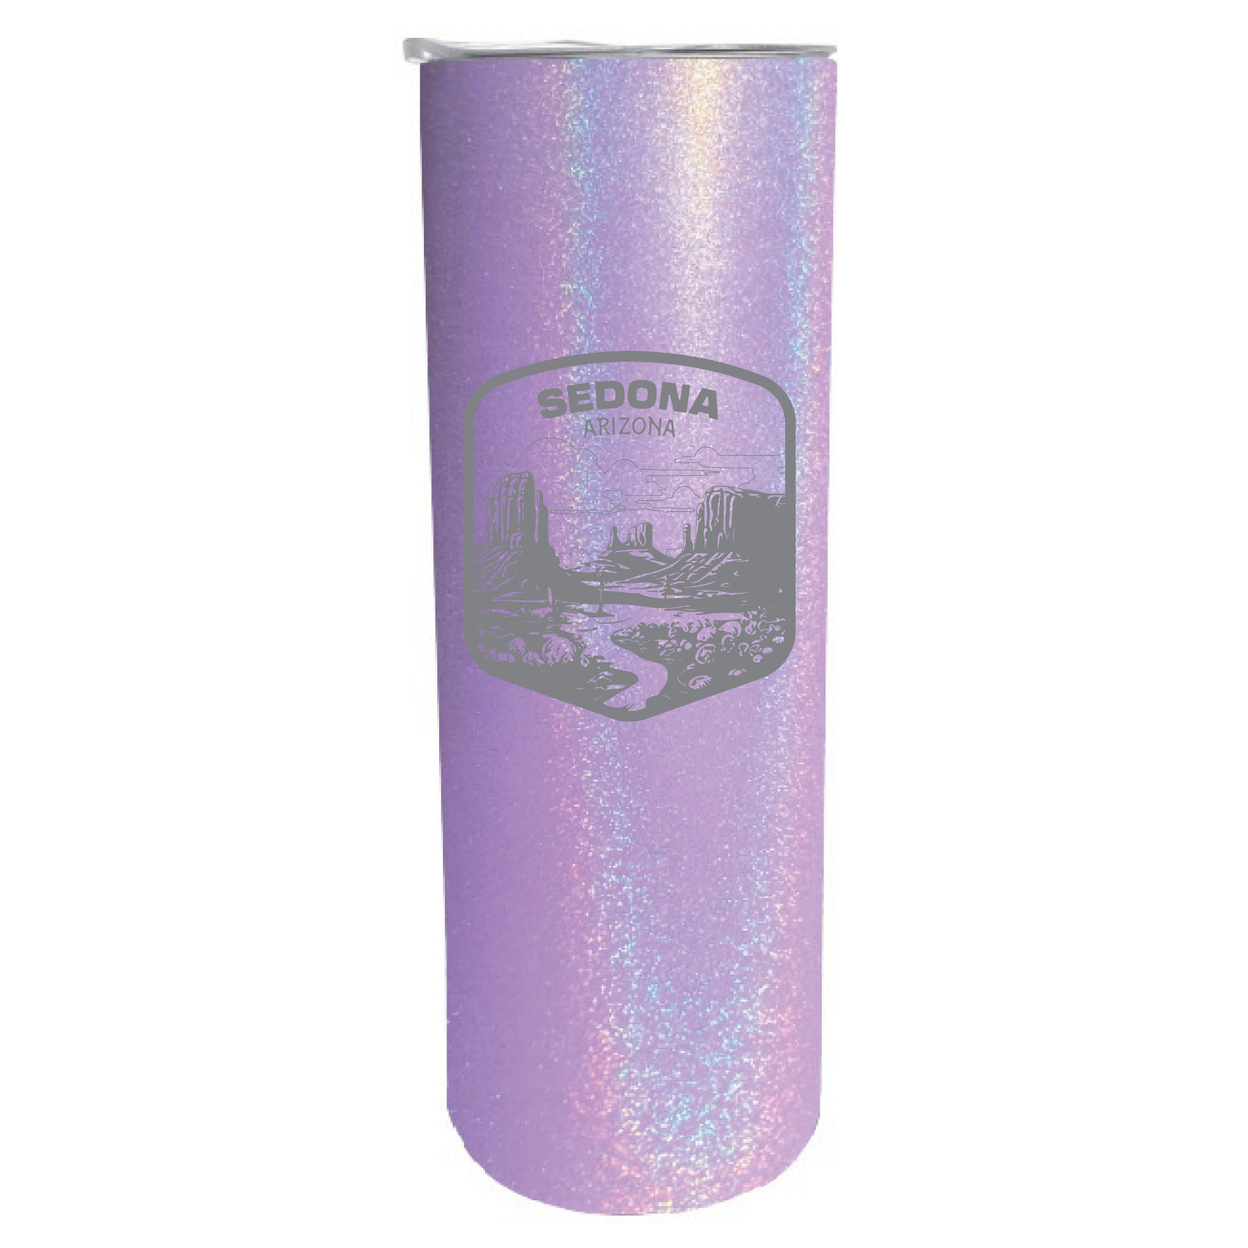 Sedona Arizona Souvenir 20 Oz Engraved Insulated Stainless Steel Skinny Tumbler - Purple Glitter,,Single Unit